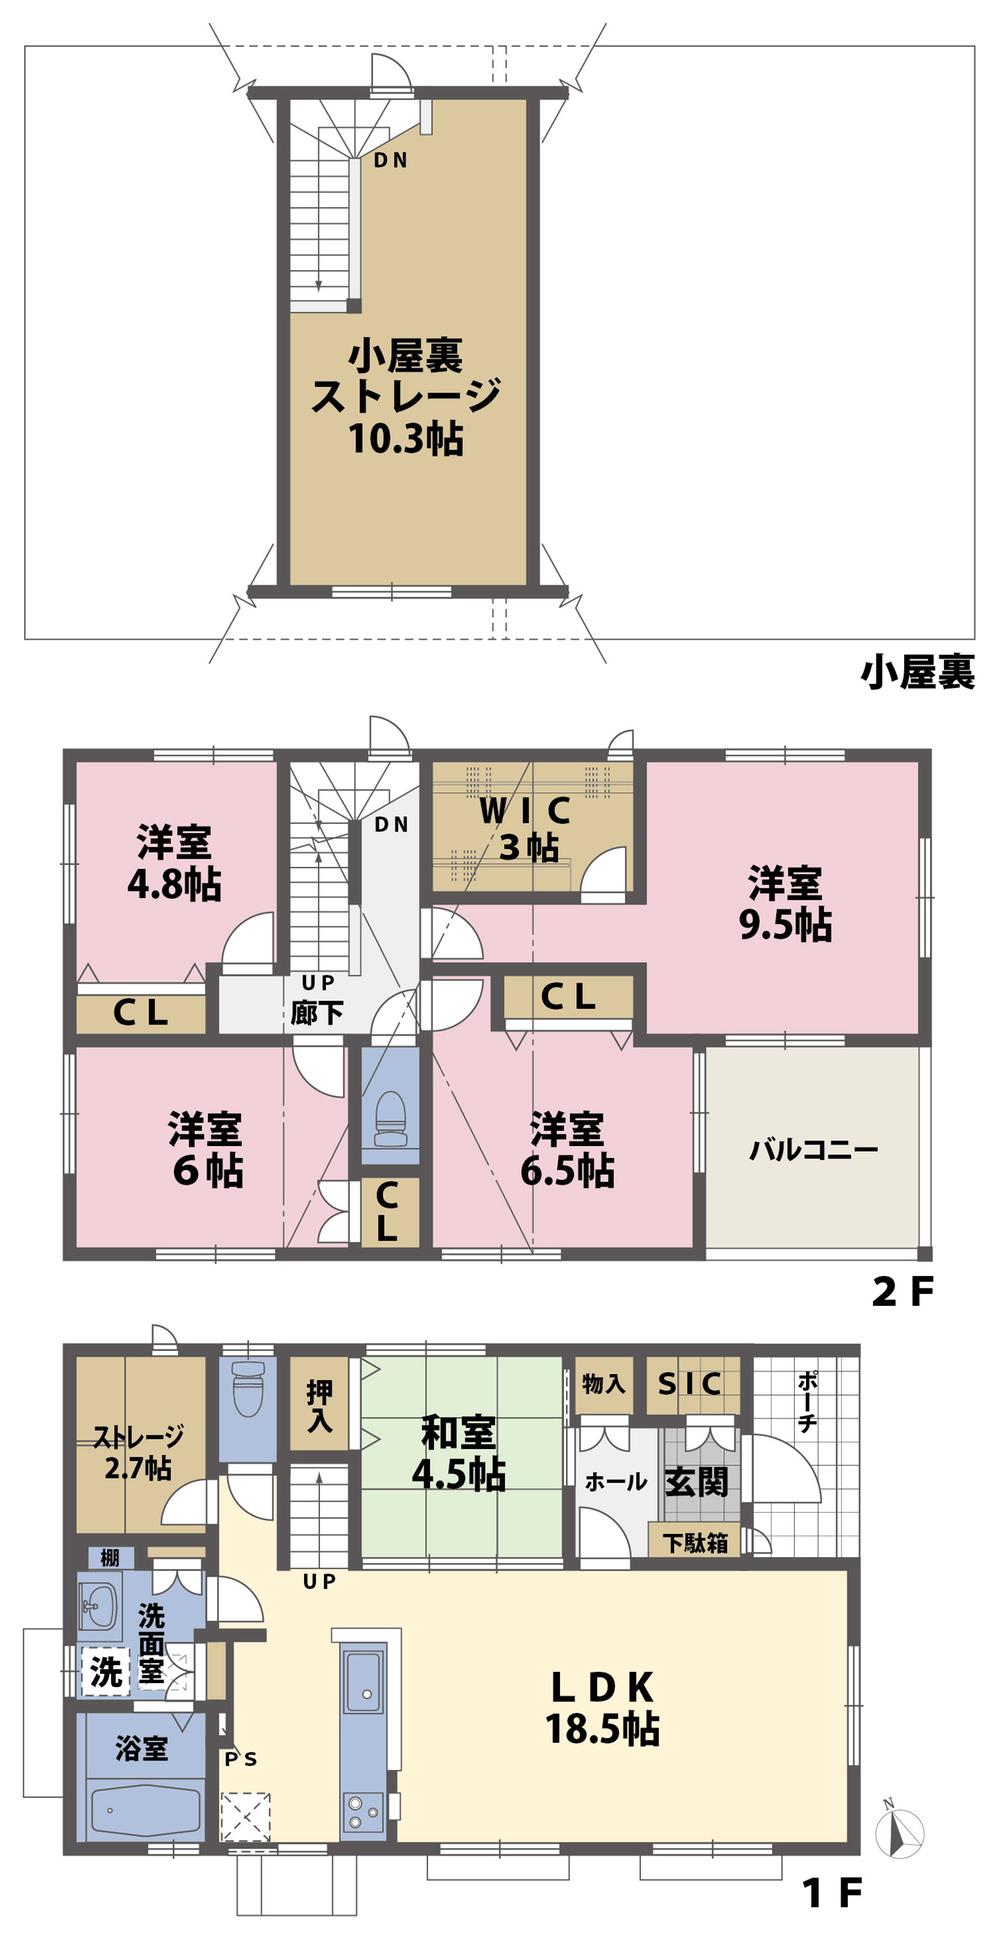 Floor plan. (No.2B-1), Price 32,980,000 yen, 5LDK+S, Land area 165.4 sq m , Building area 119.03 sq m